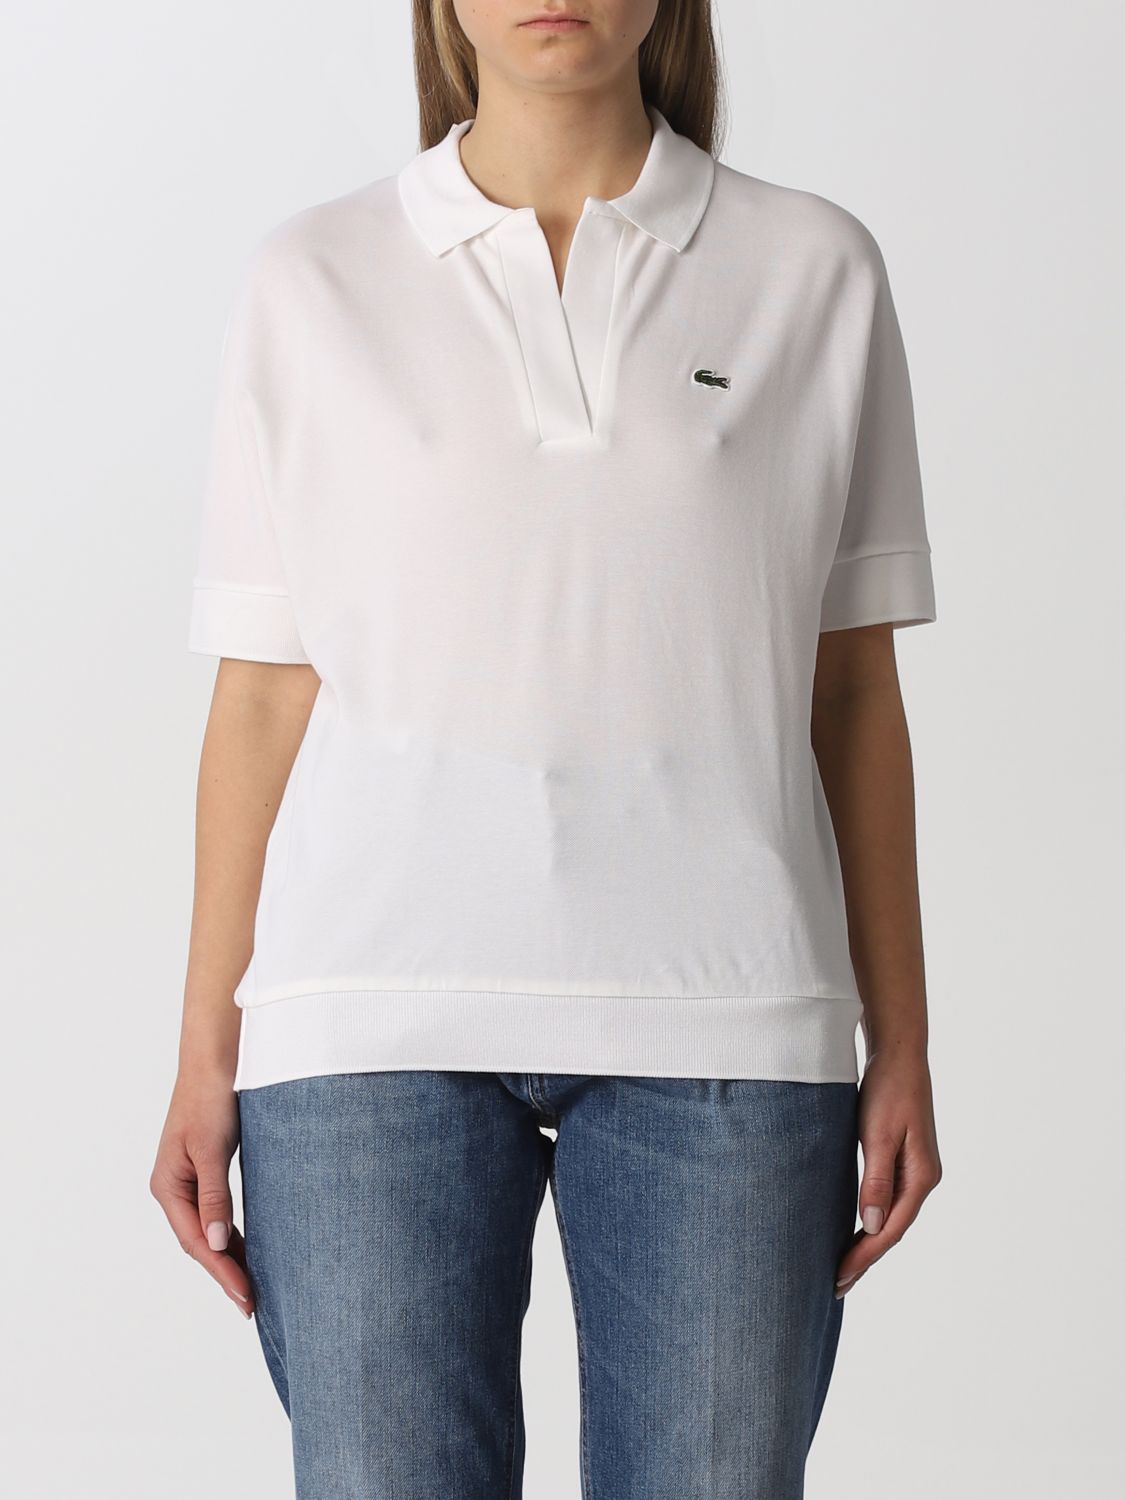 LACOSTE: polo shirt for woman - White | Lacoste polo shirt PF0504 ...